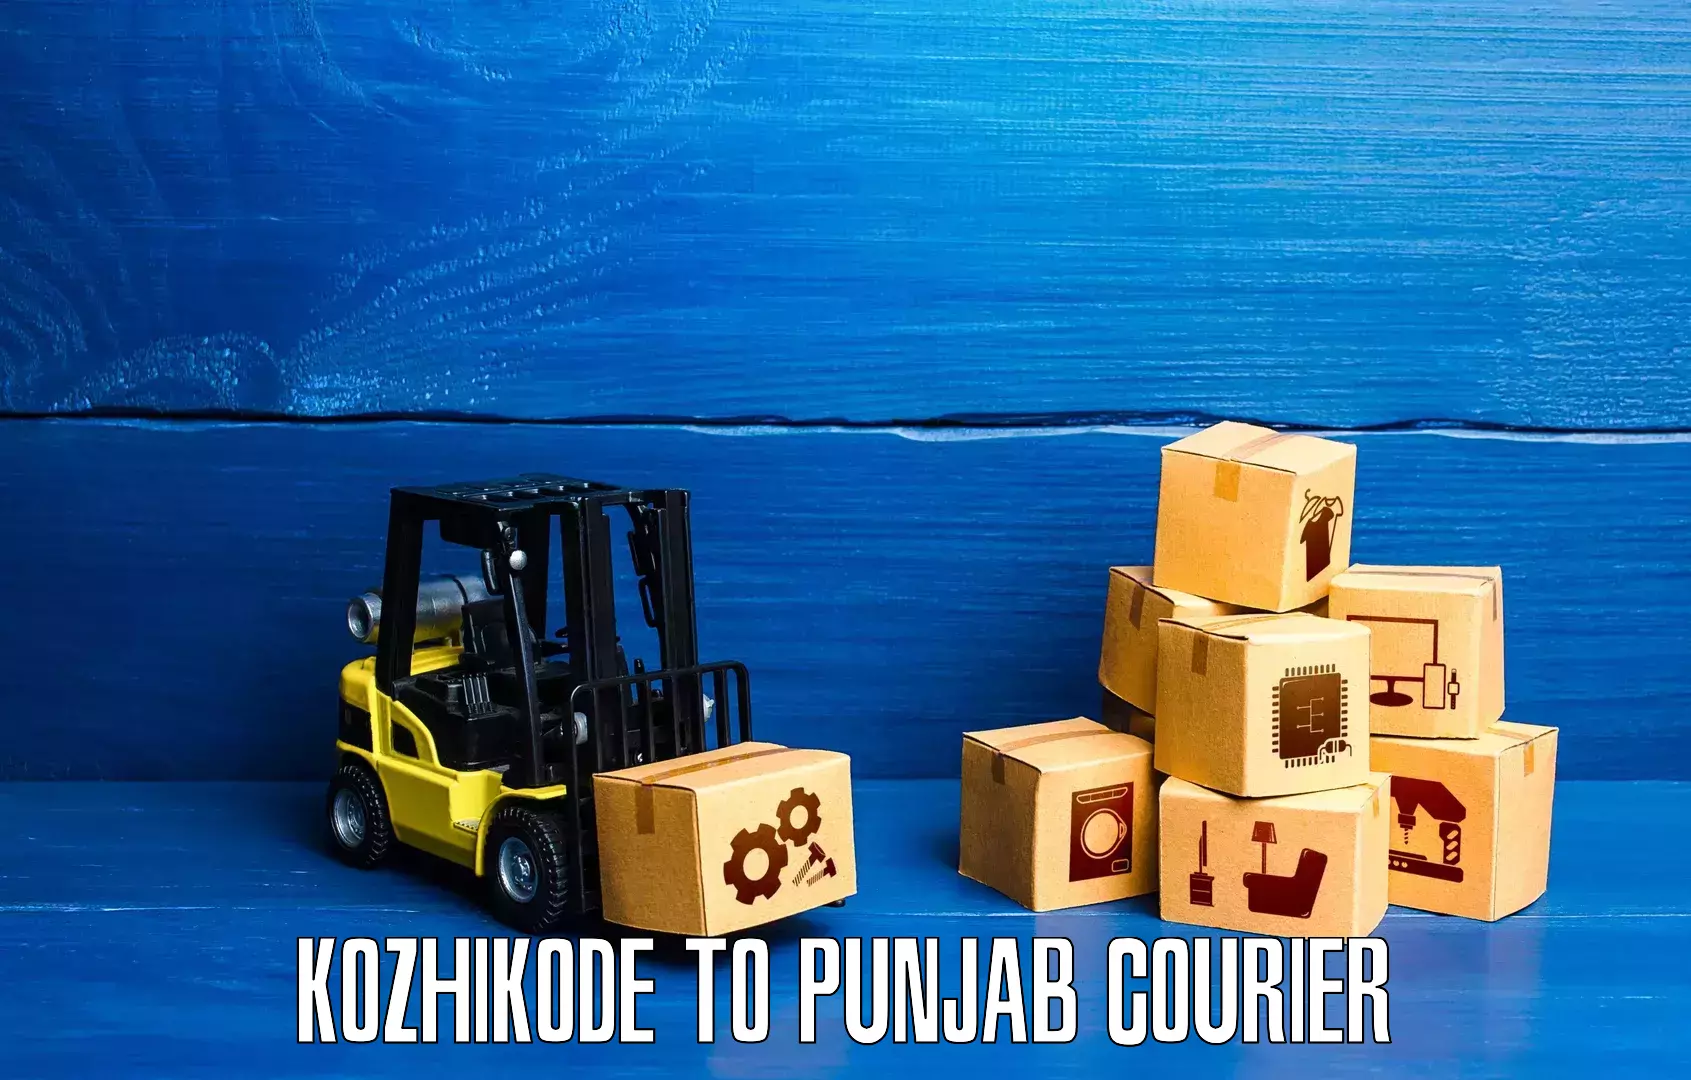 Global shipping networks Kozhikode to Amritsar